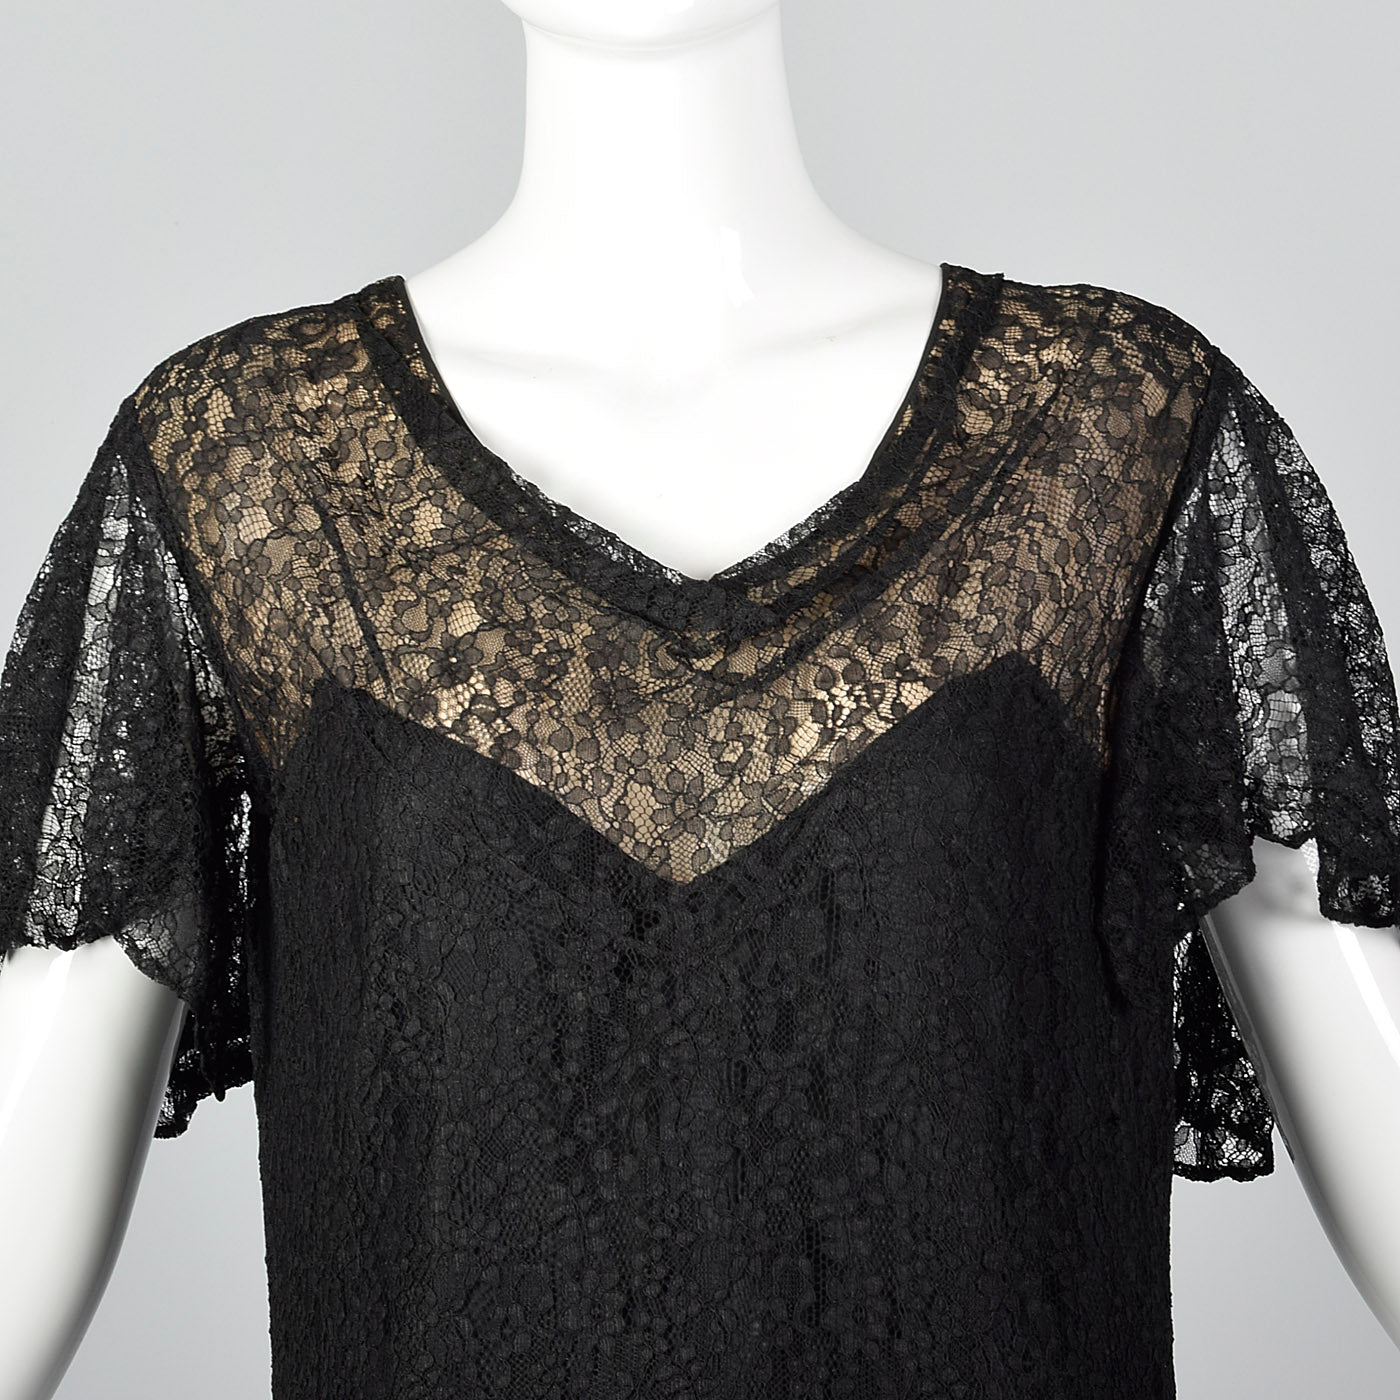 1930s Black Lace Overlay Dress